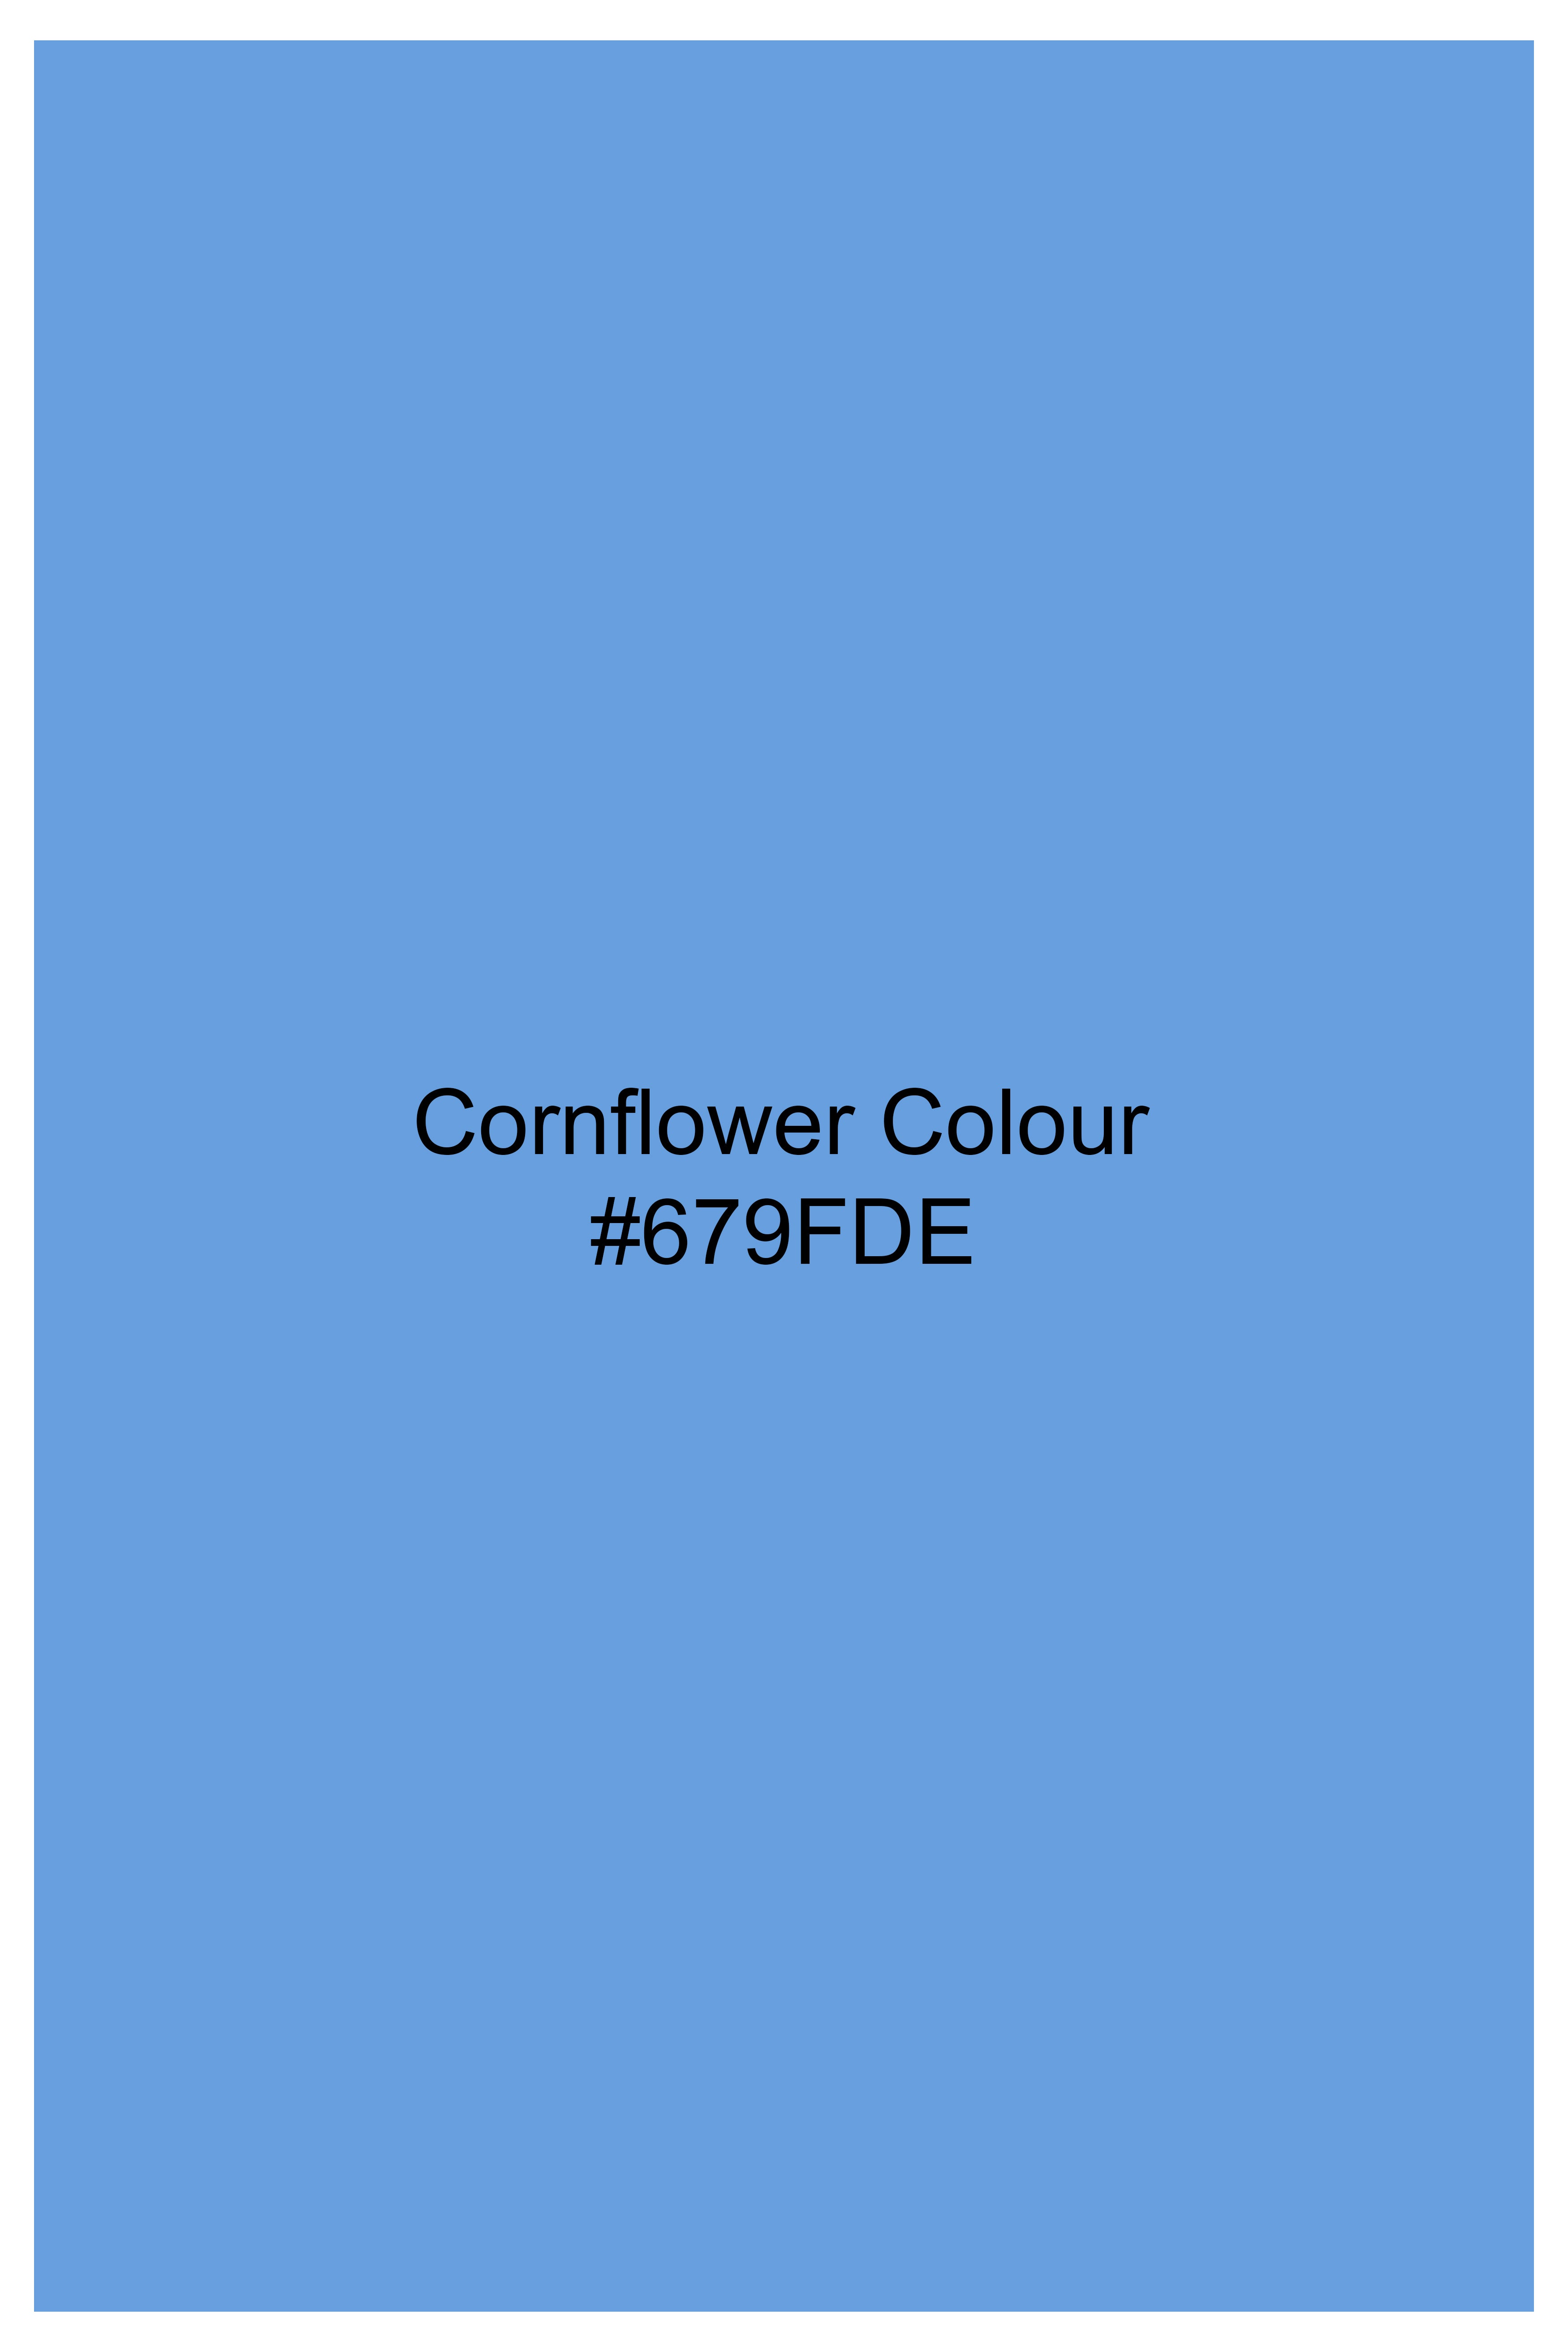 Cornflower Blue Dobby Textured Premium Giza Cotton Shirt